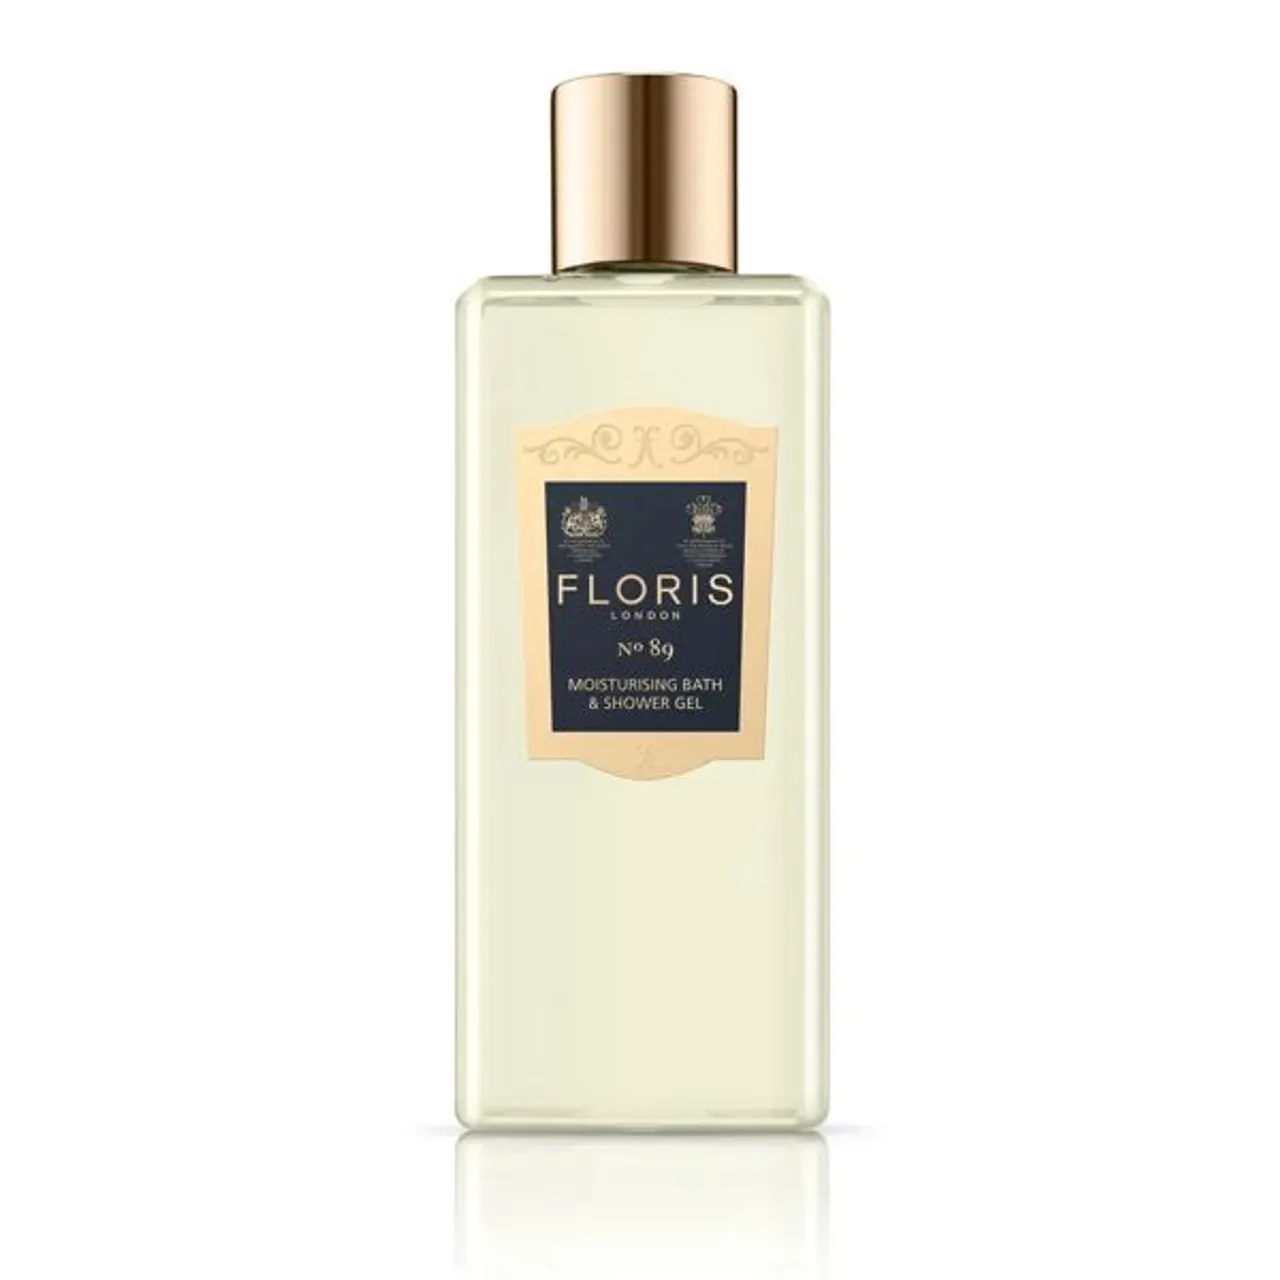 Floris No.89 Moisturising Bath & Shower Gel, 250ml - Male - Size: 250ml